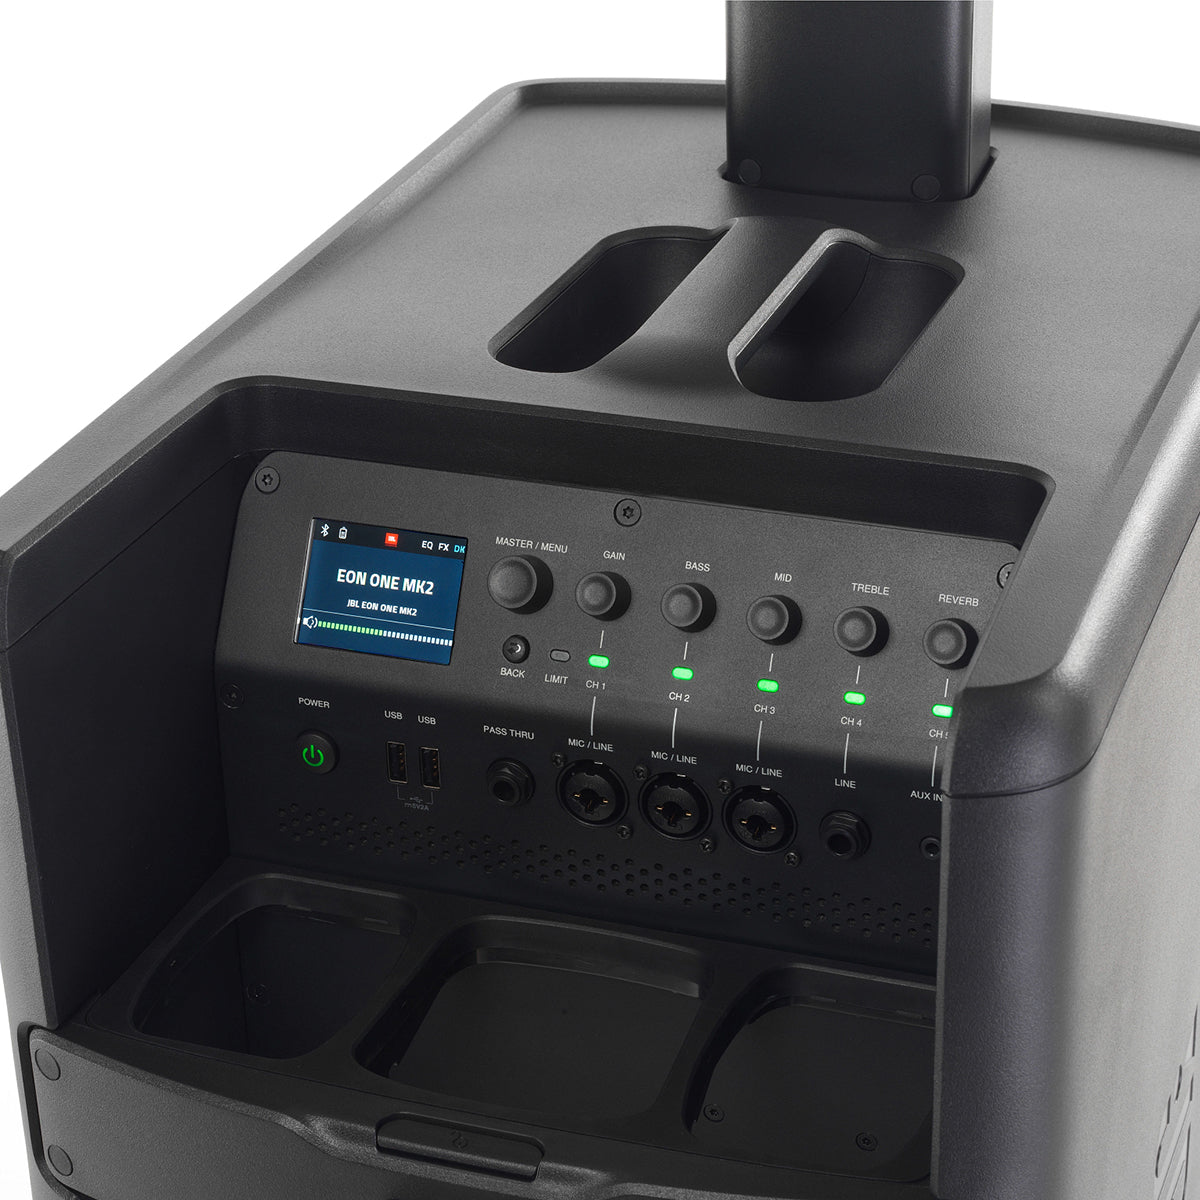 JBL EON One MK2 Portable PA System COMPLETE AUDIO BUNDLE – Kraft Music